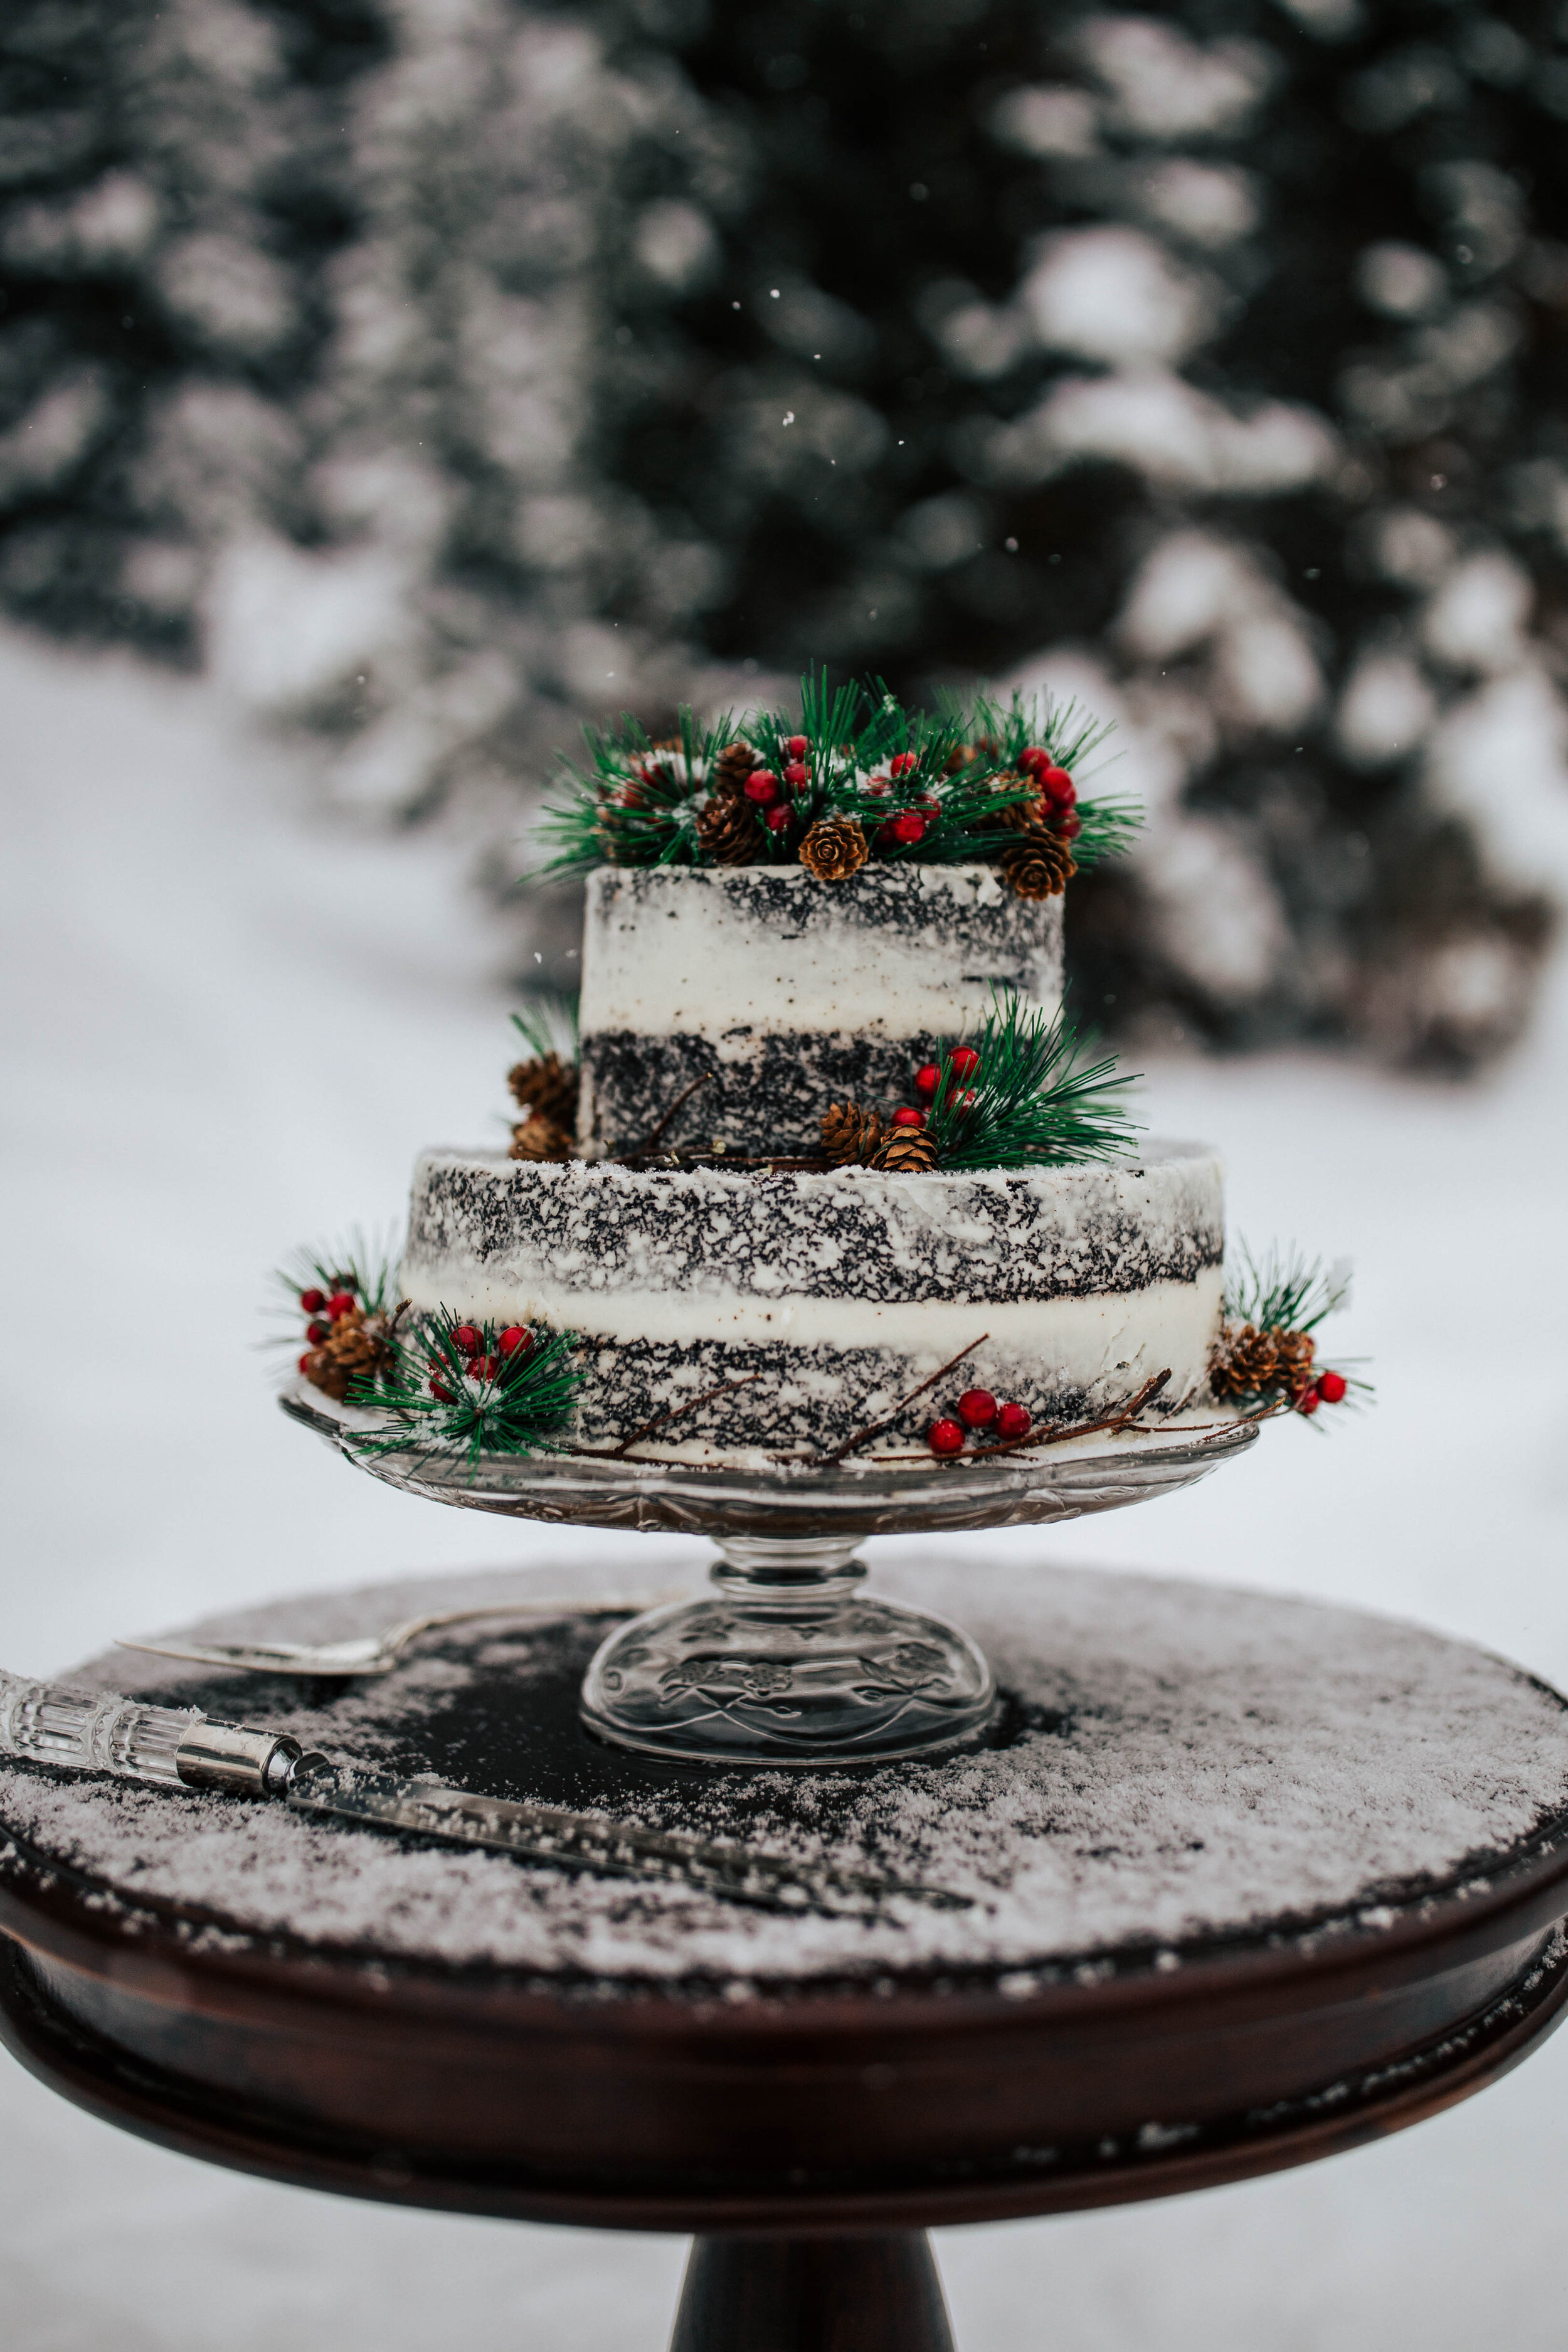 Chocolate wedding cake white vanilla frosting pine cones green holly berries snowy cake cutting table winter #weddingcake #cake #weddingphotographer #chocolatecake #cakevendor